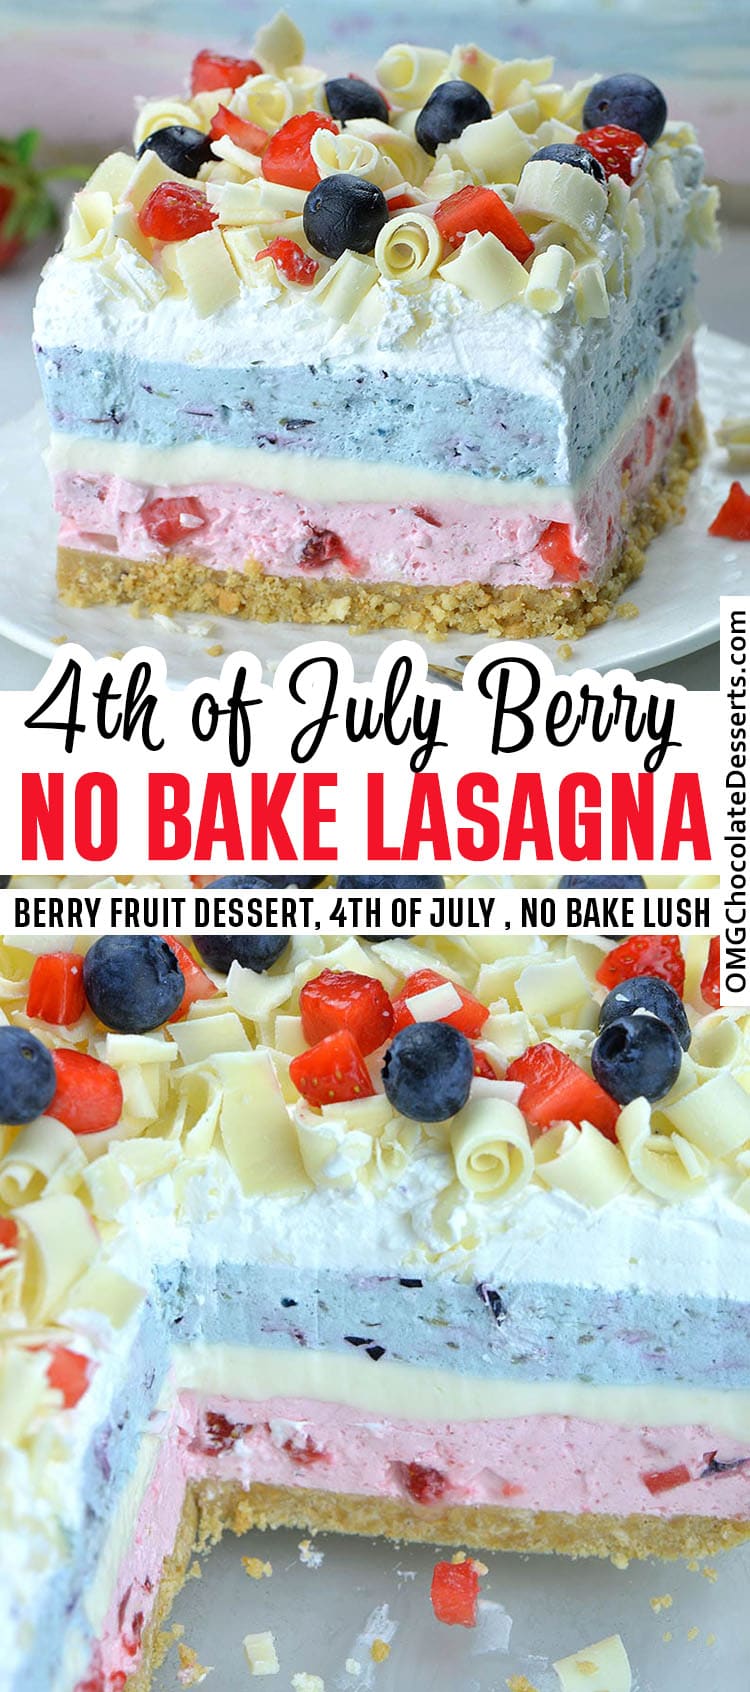 4th of July Berry Dessert Lasagna